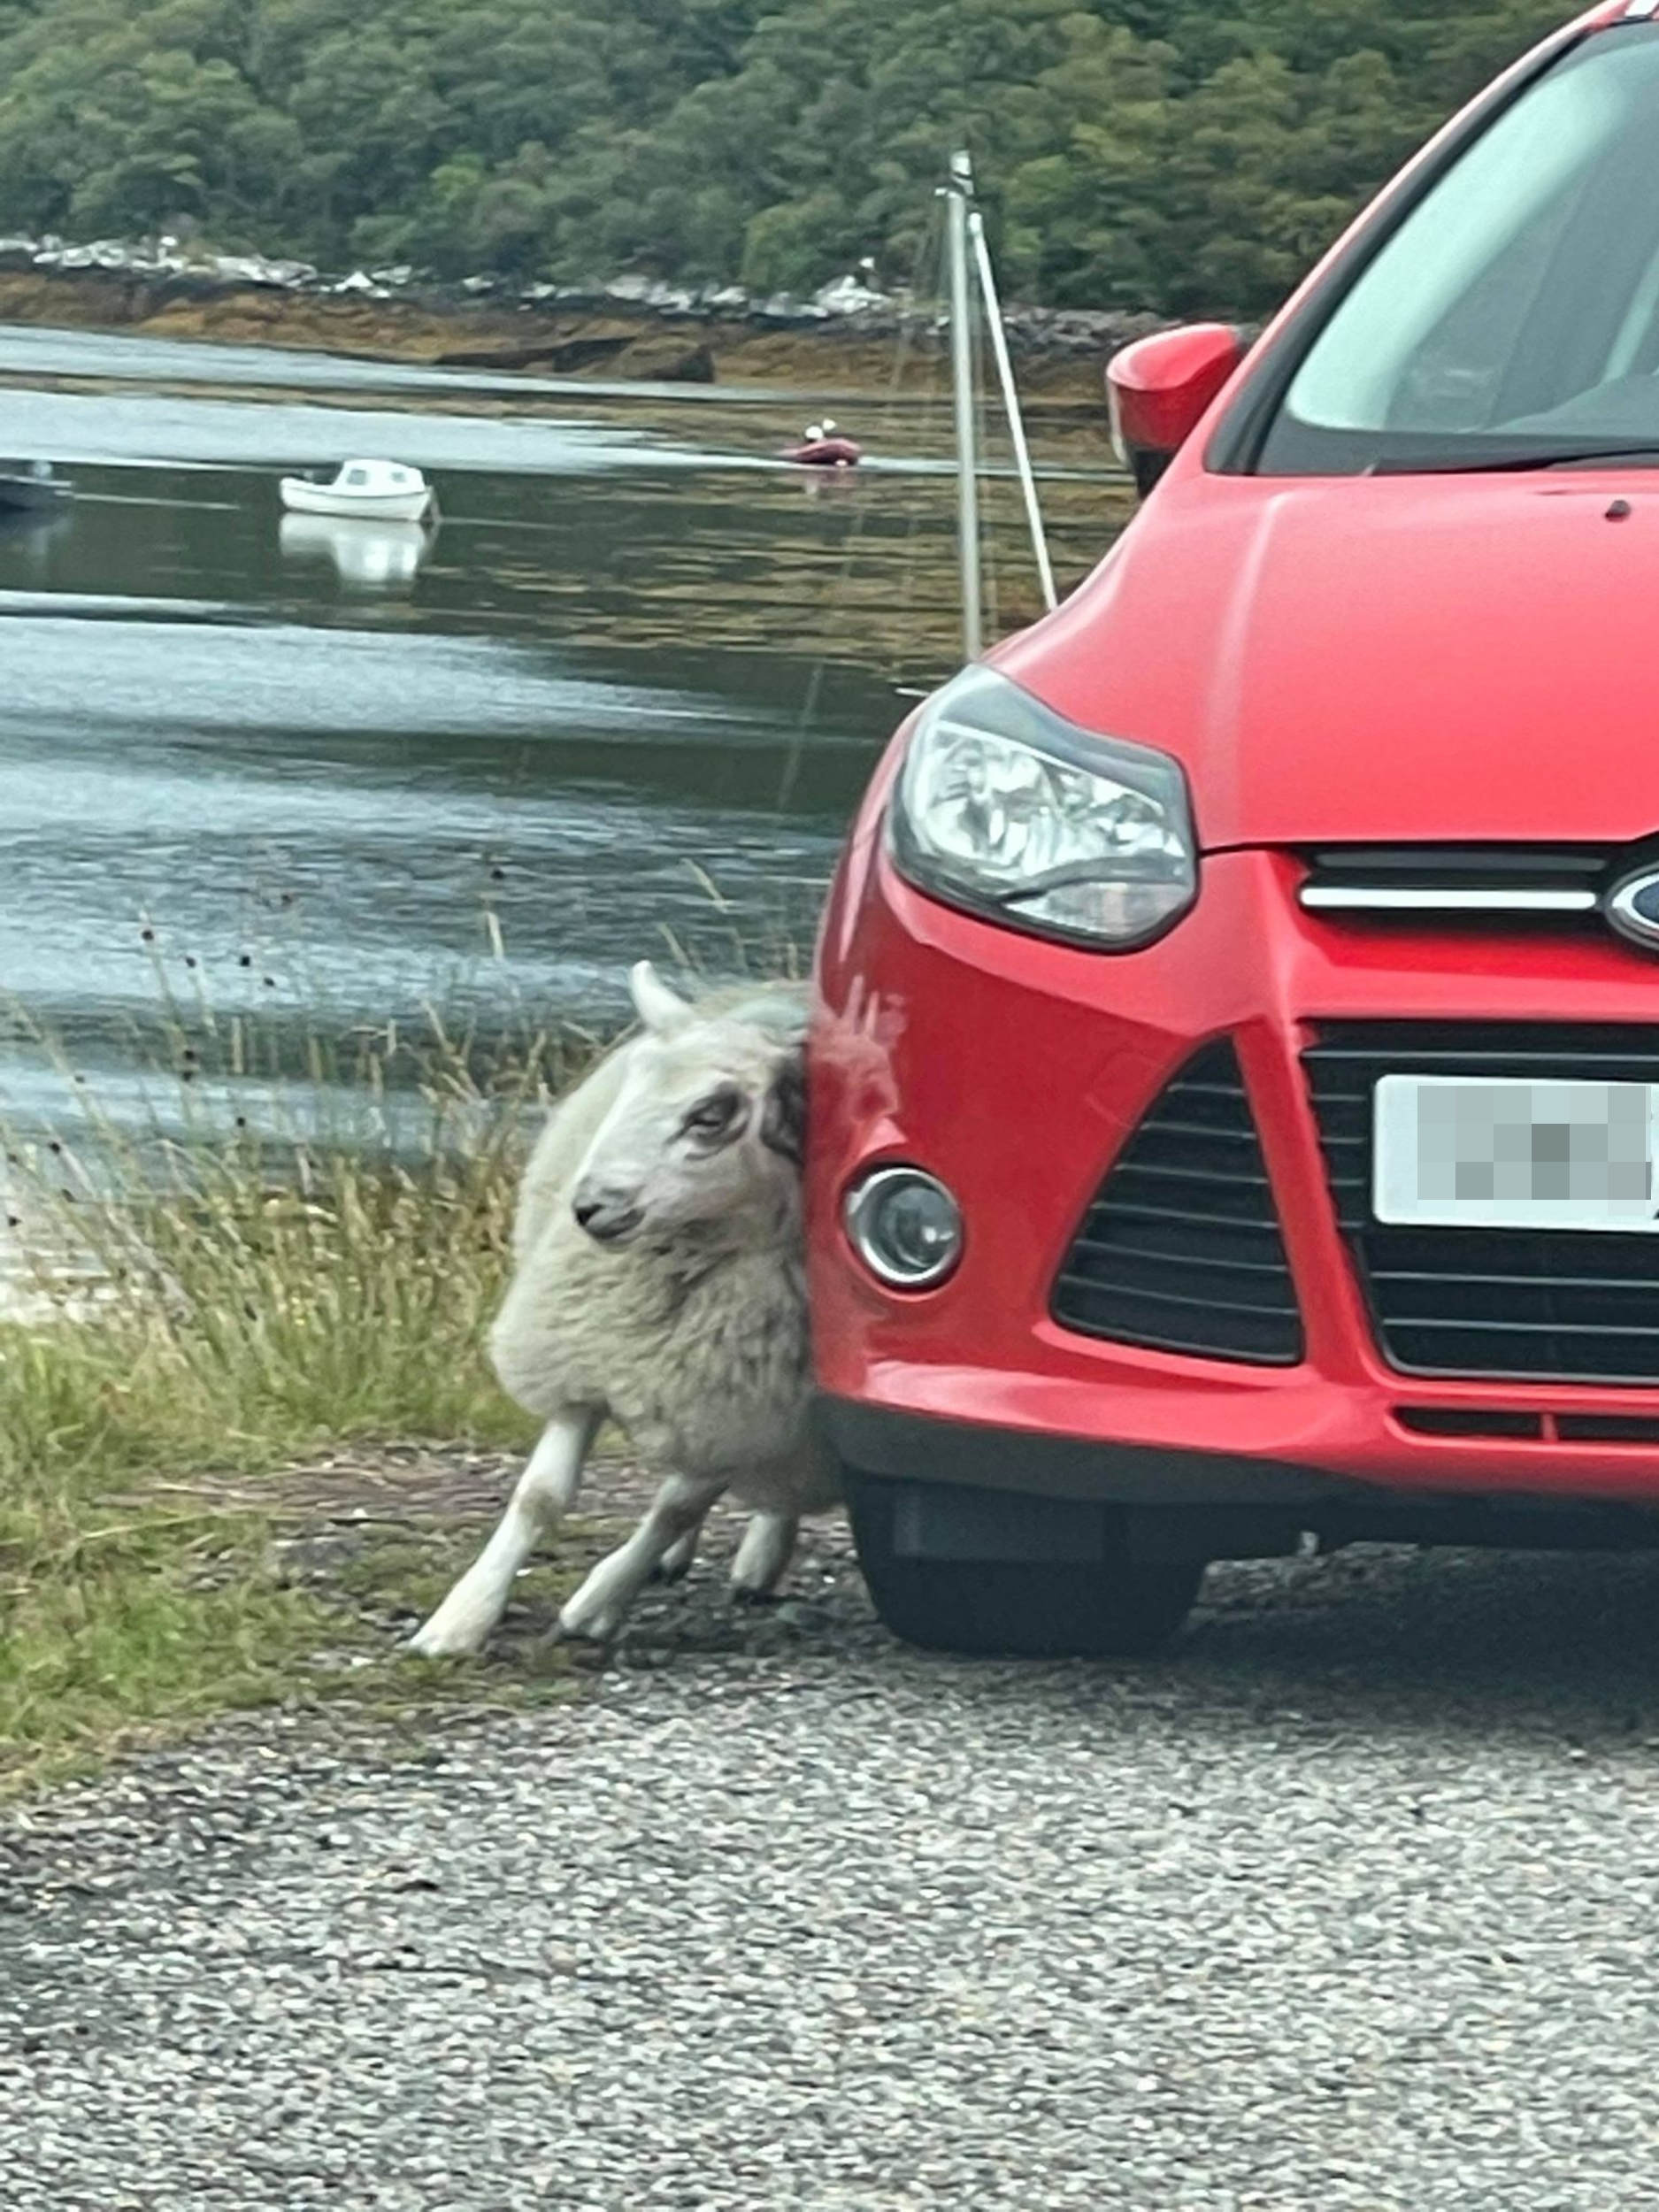 Itchy sheep and car reg - Animal News Scotland